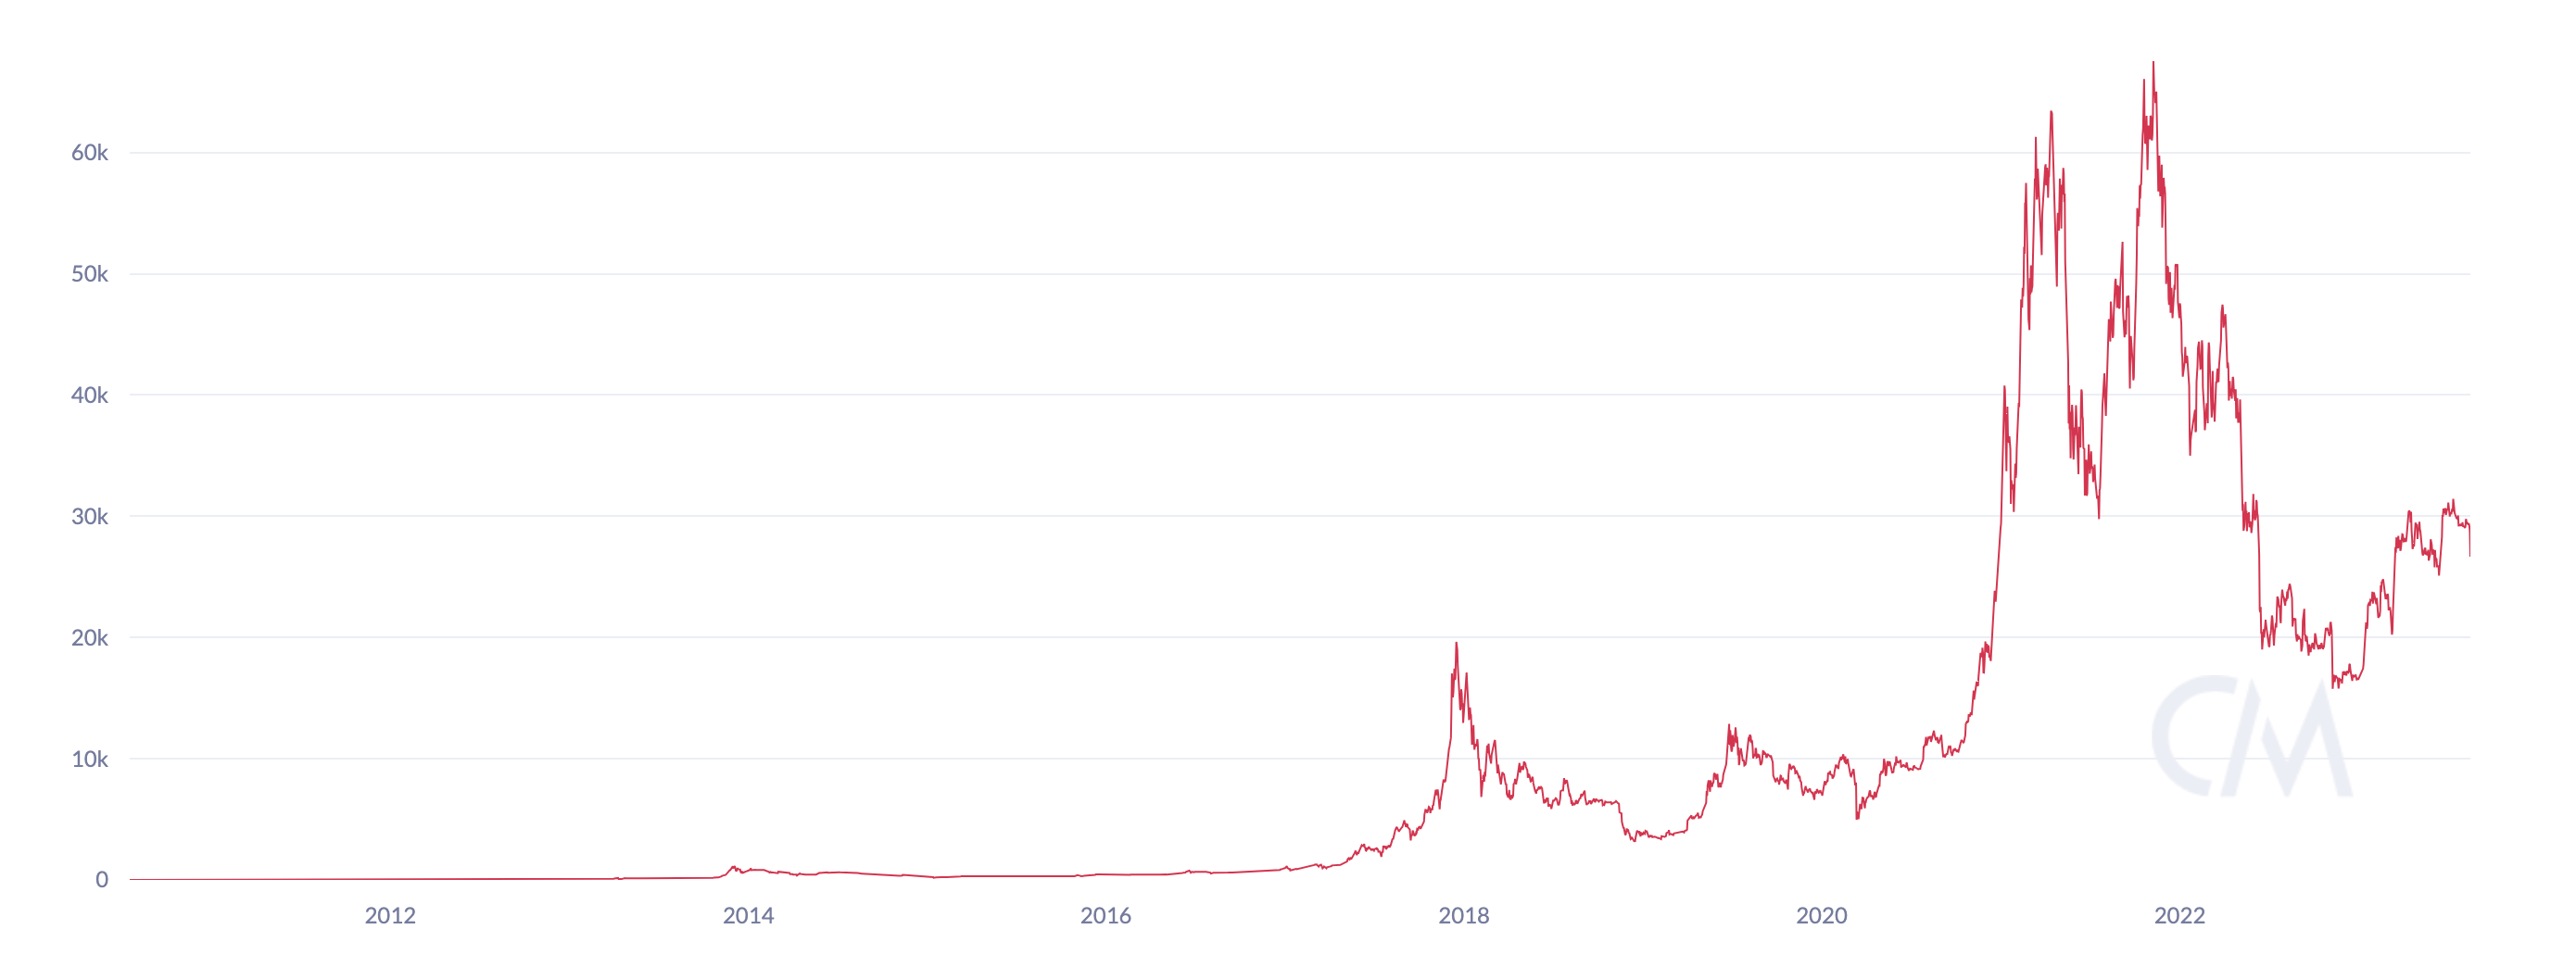 A graph of Bitcoin transaction data over time